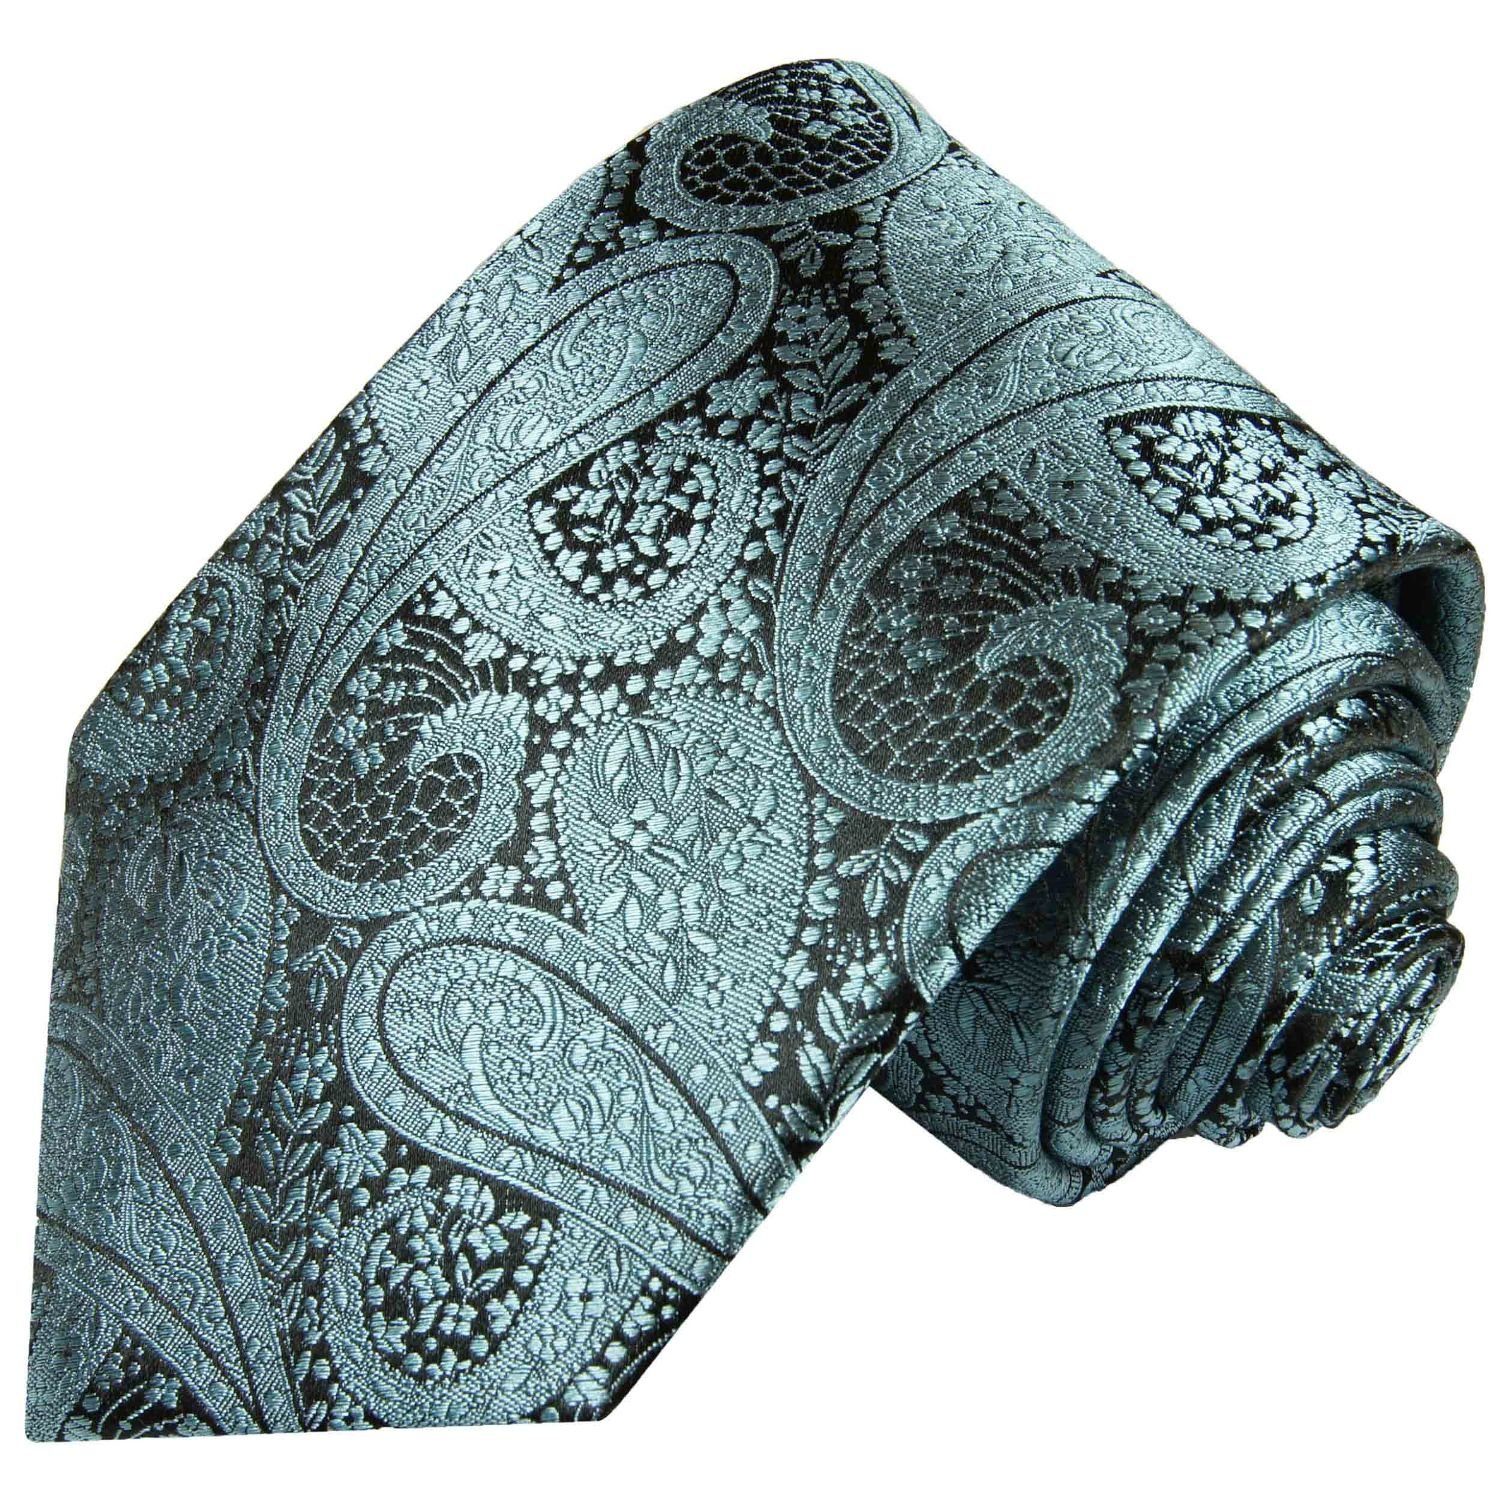 Paul Malone Seide Schmal Seidenkrawatte Herren Krawatte türkis Elegante paisley brokat 100% Schlips 590 schwarz (6cm)